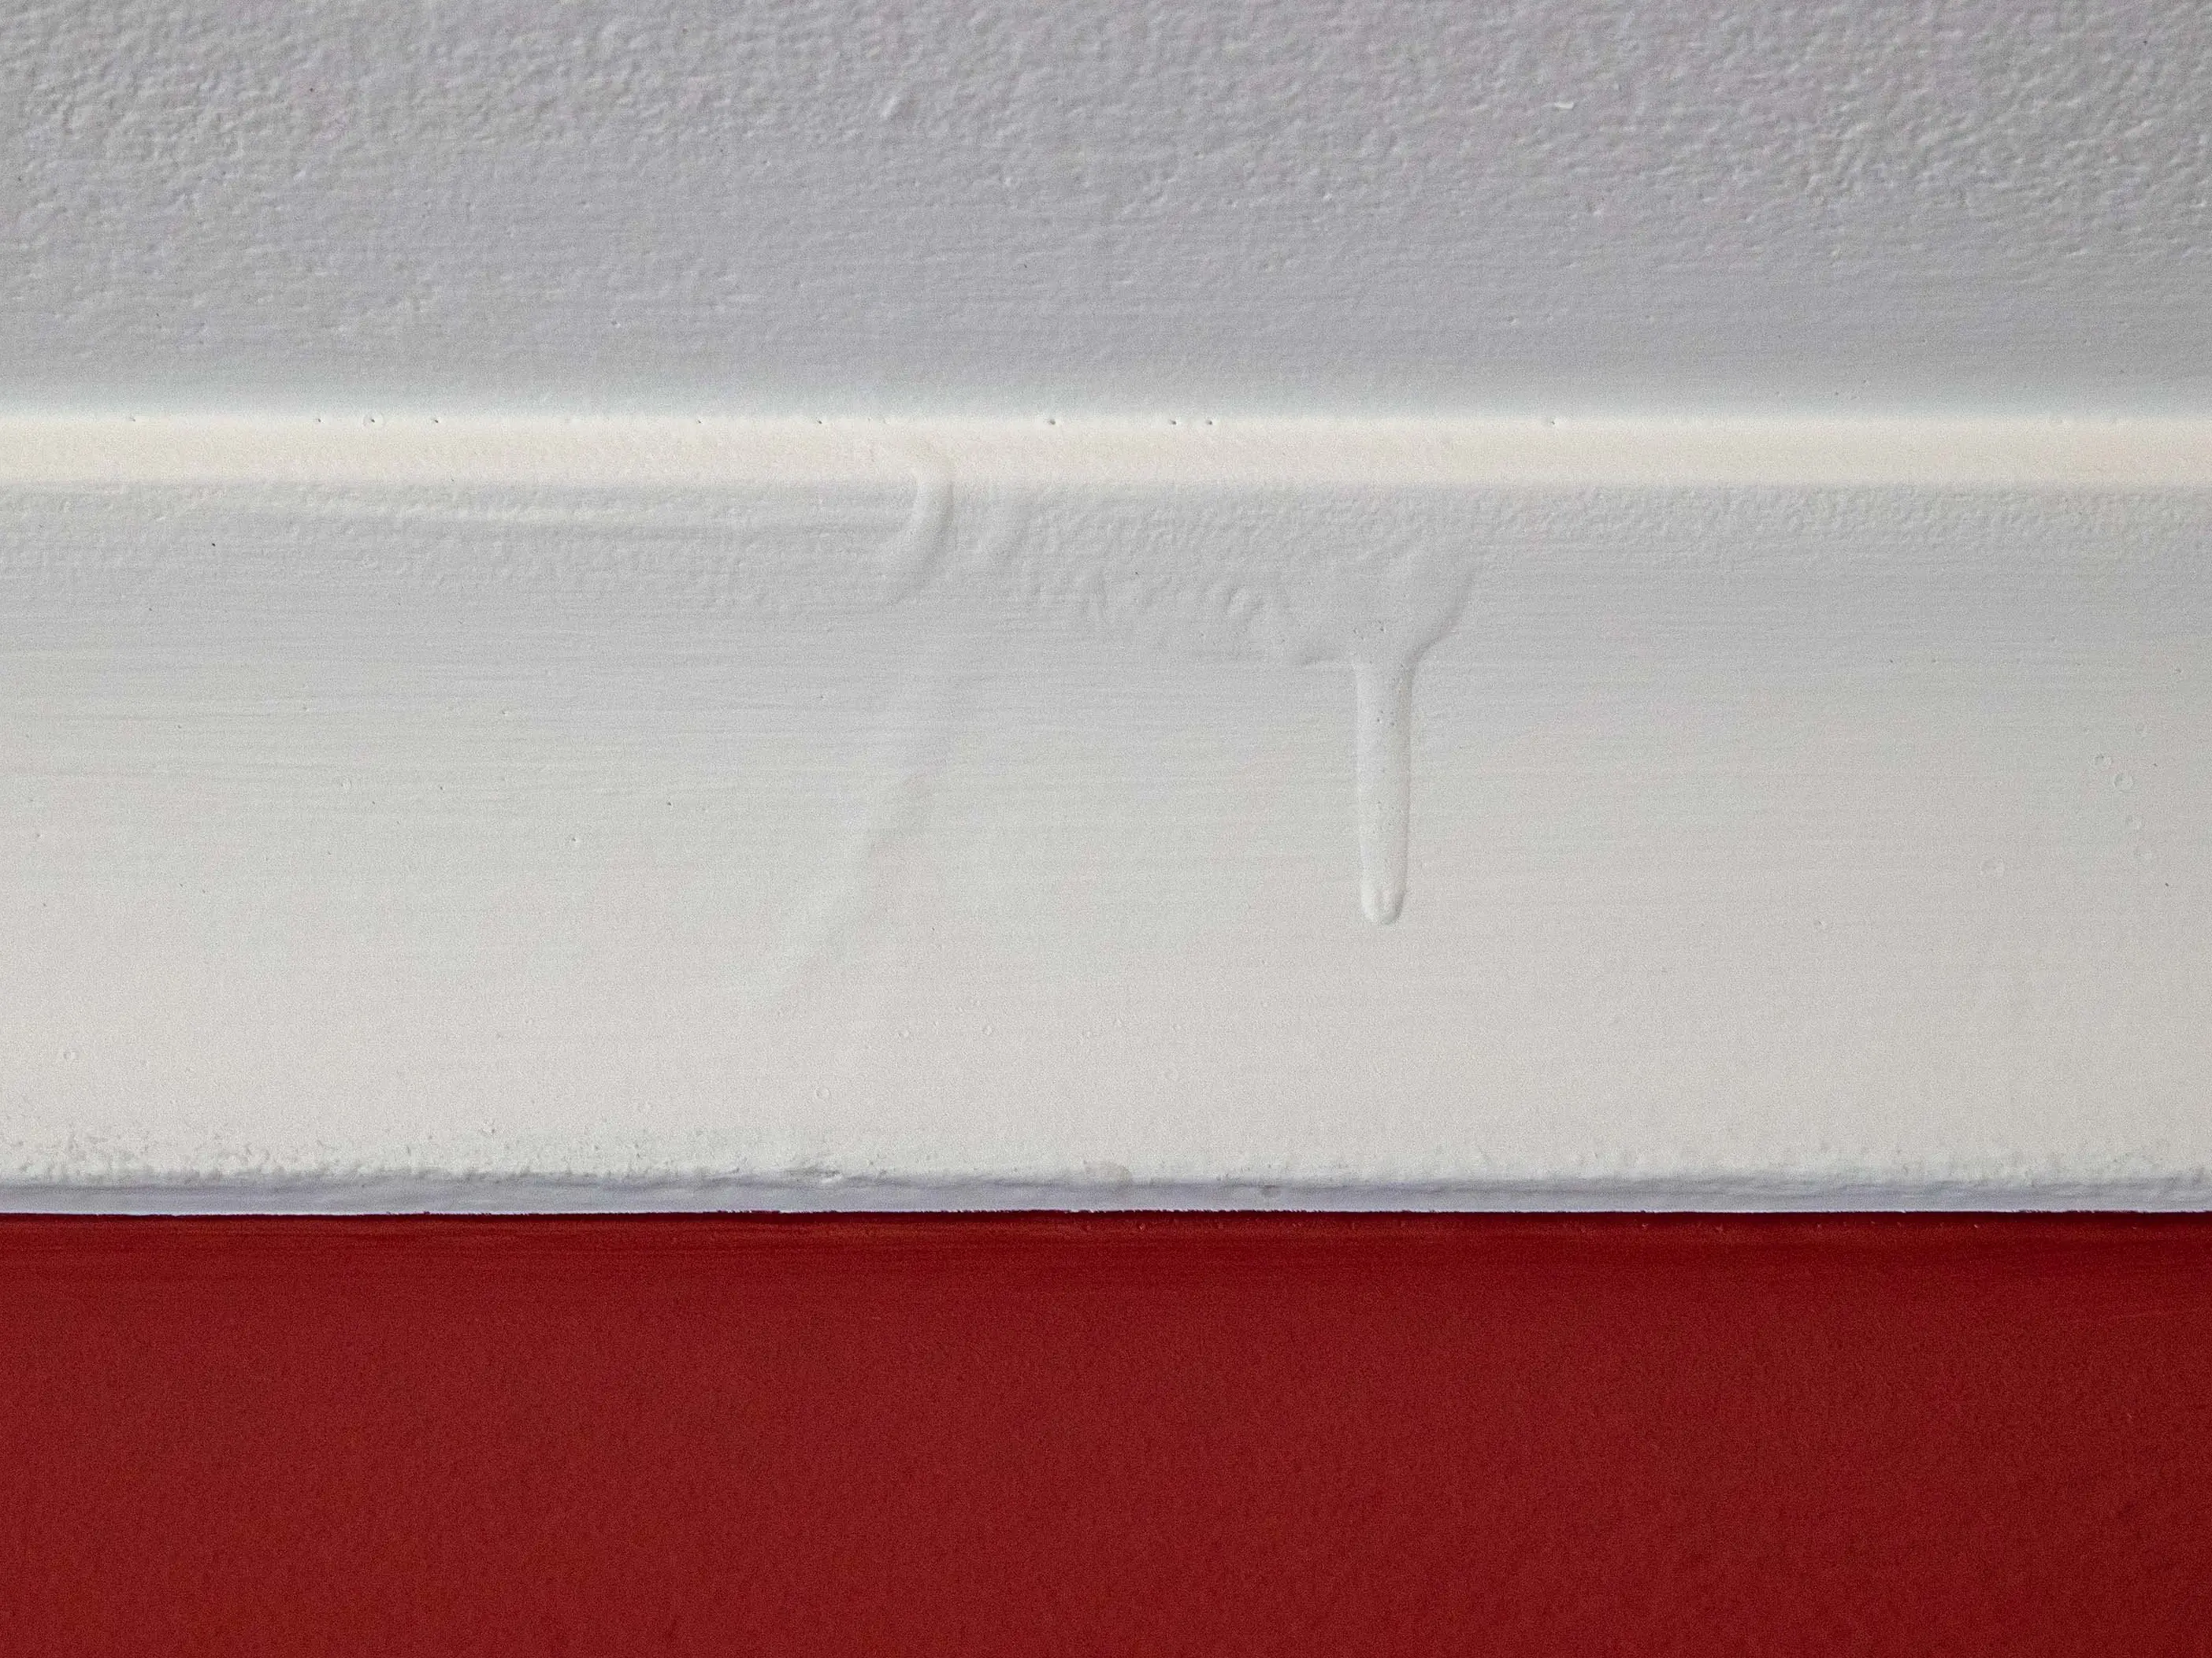 Sagging paint example on a door